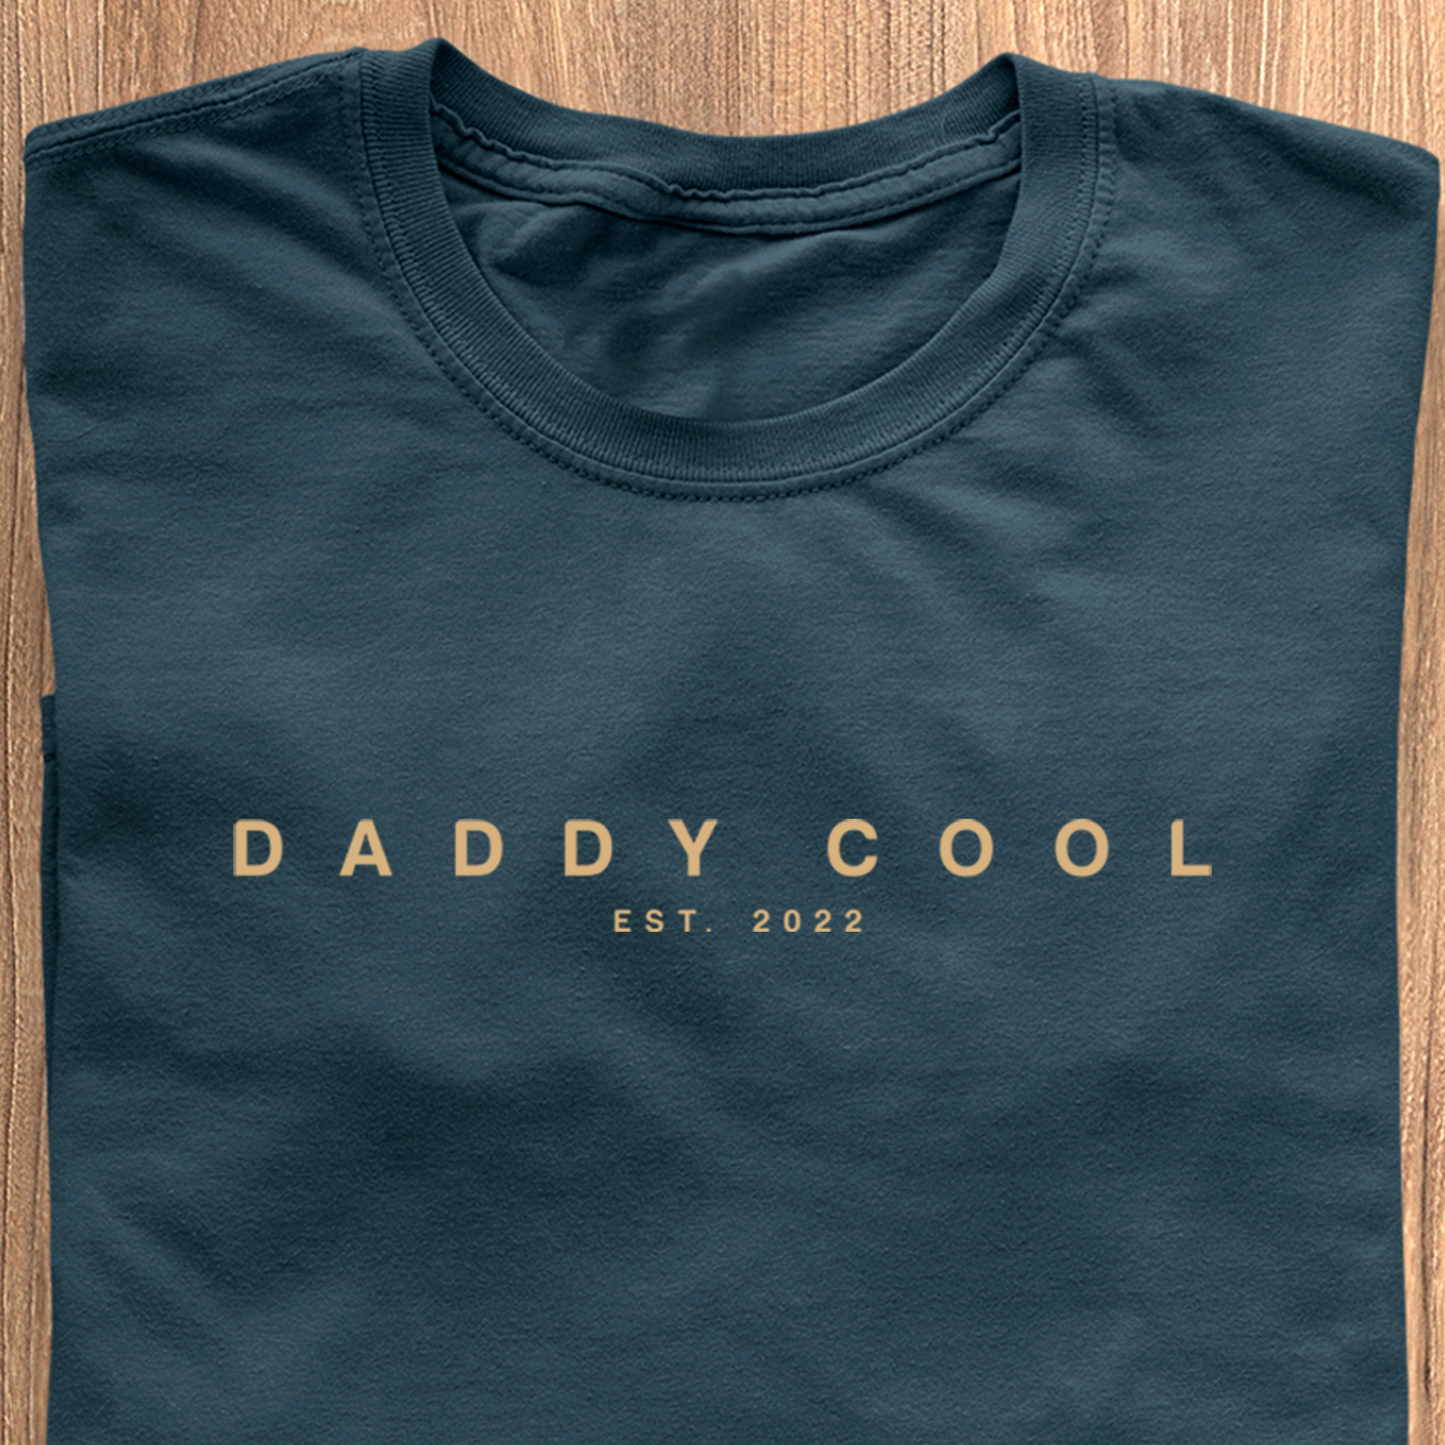 Daddy Cool Modern Edition T-Shirt - Datum personalisierbar